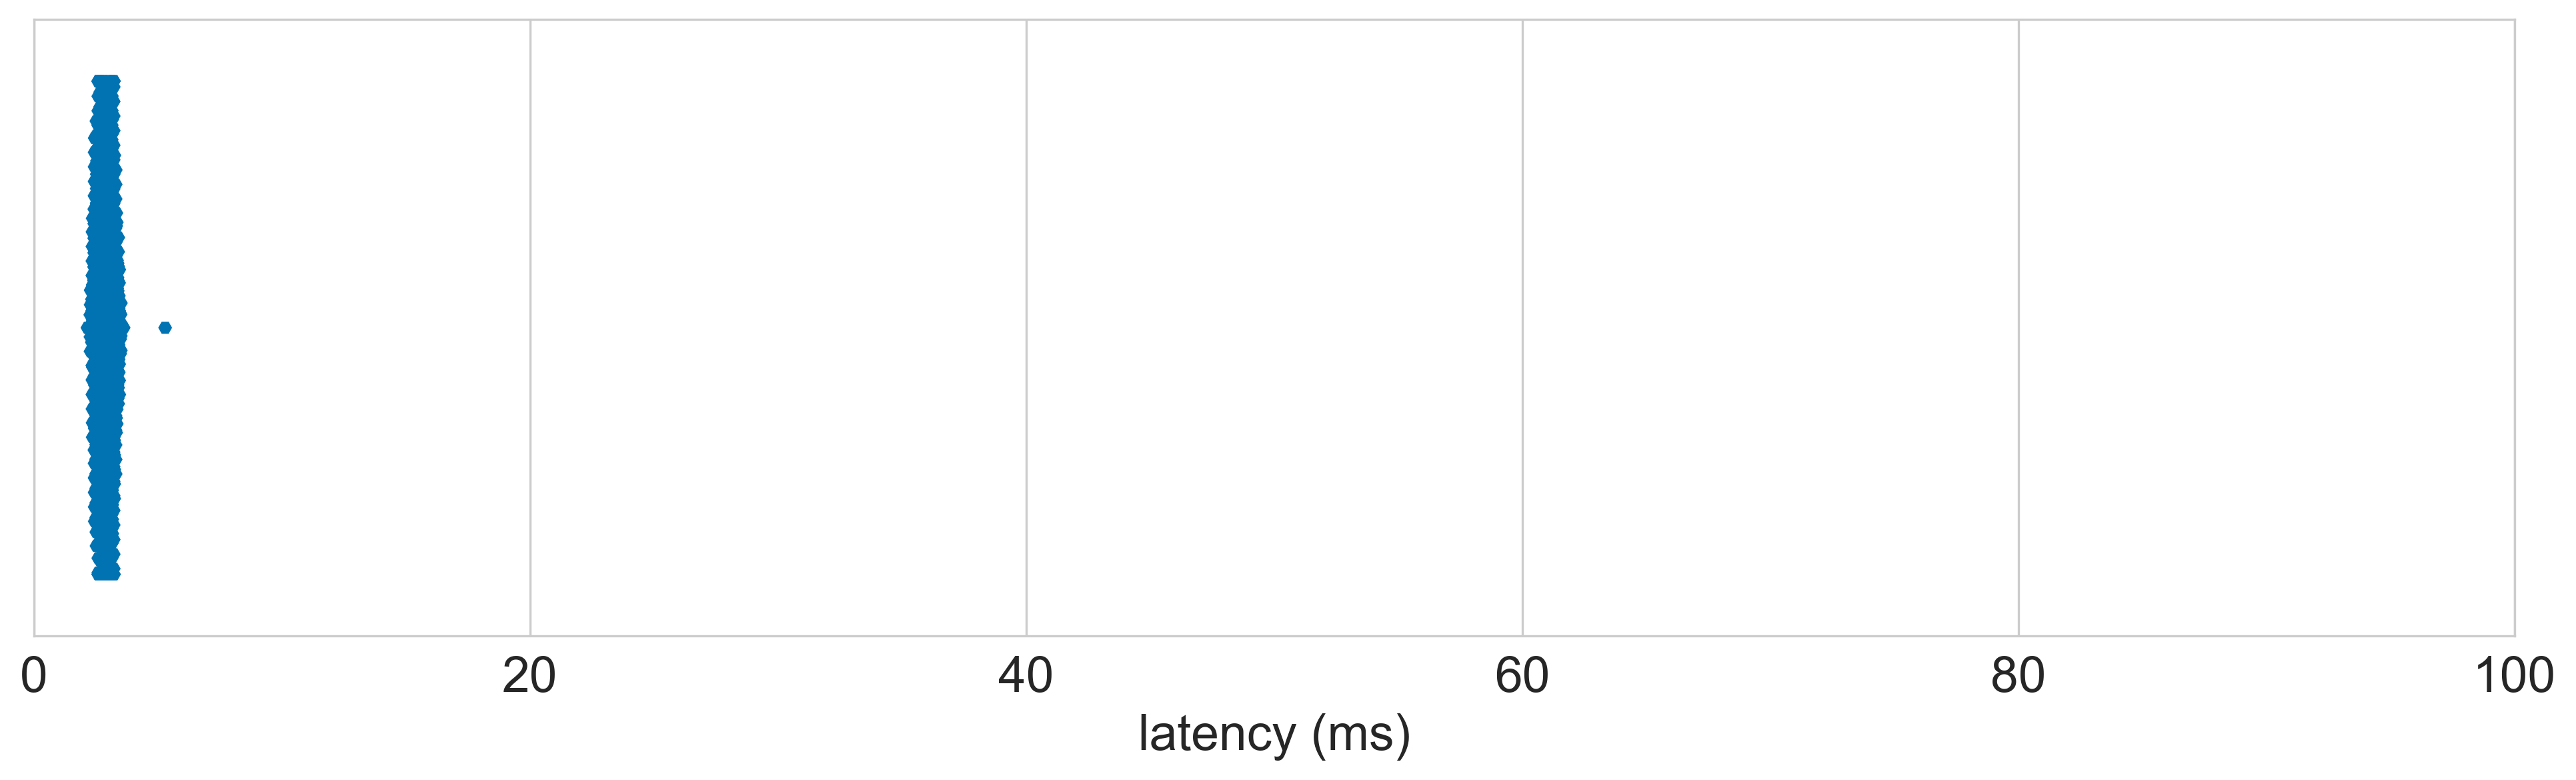 Logitech_USB_Gaming_Mouse latency distribution 